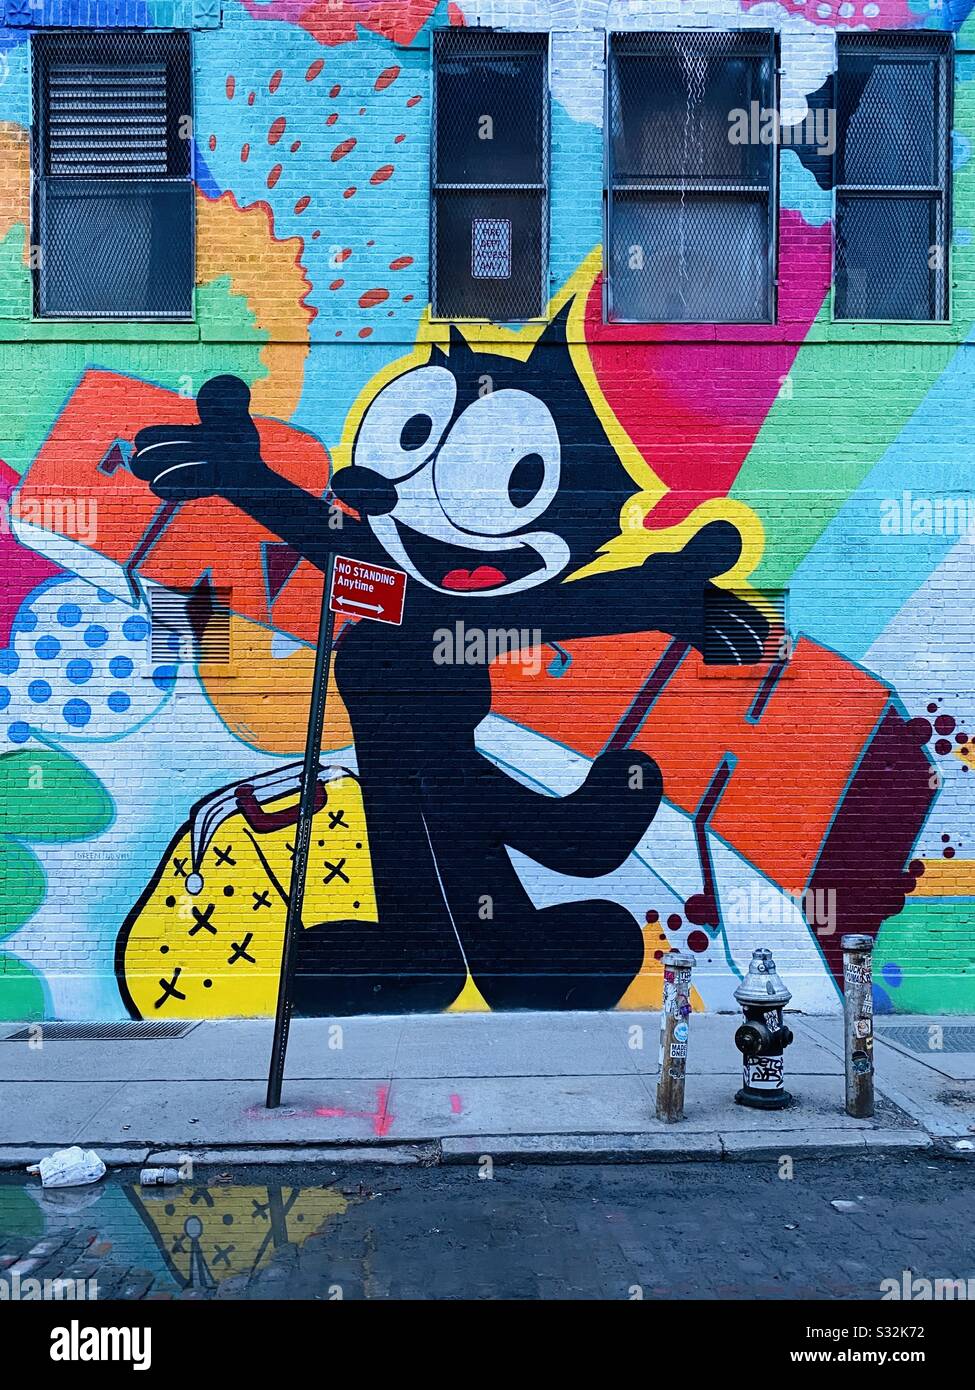 Graffiti street art on the streets of New York city. Manhattan, New York, USA. Stock Photo